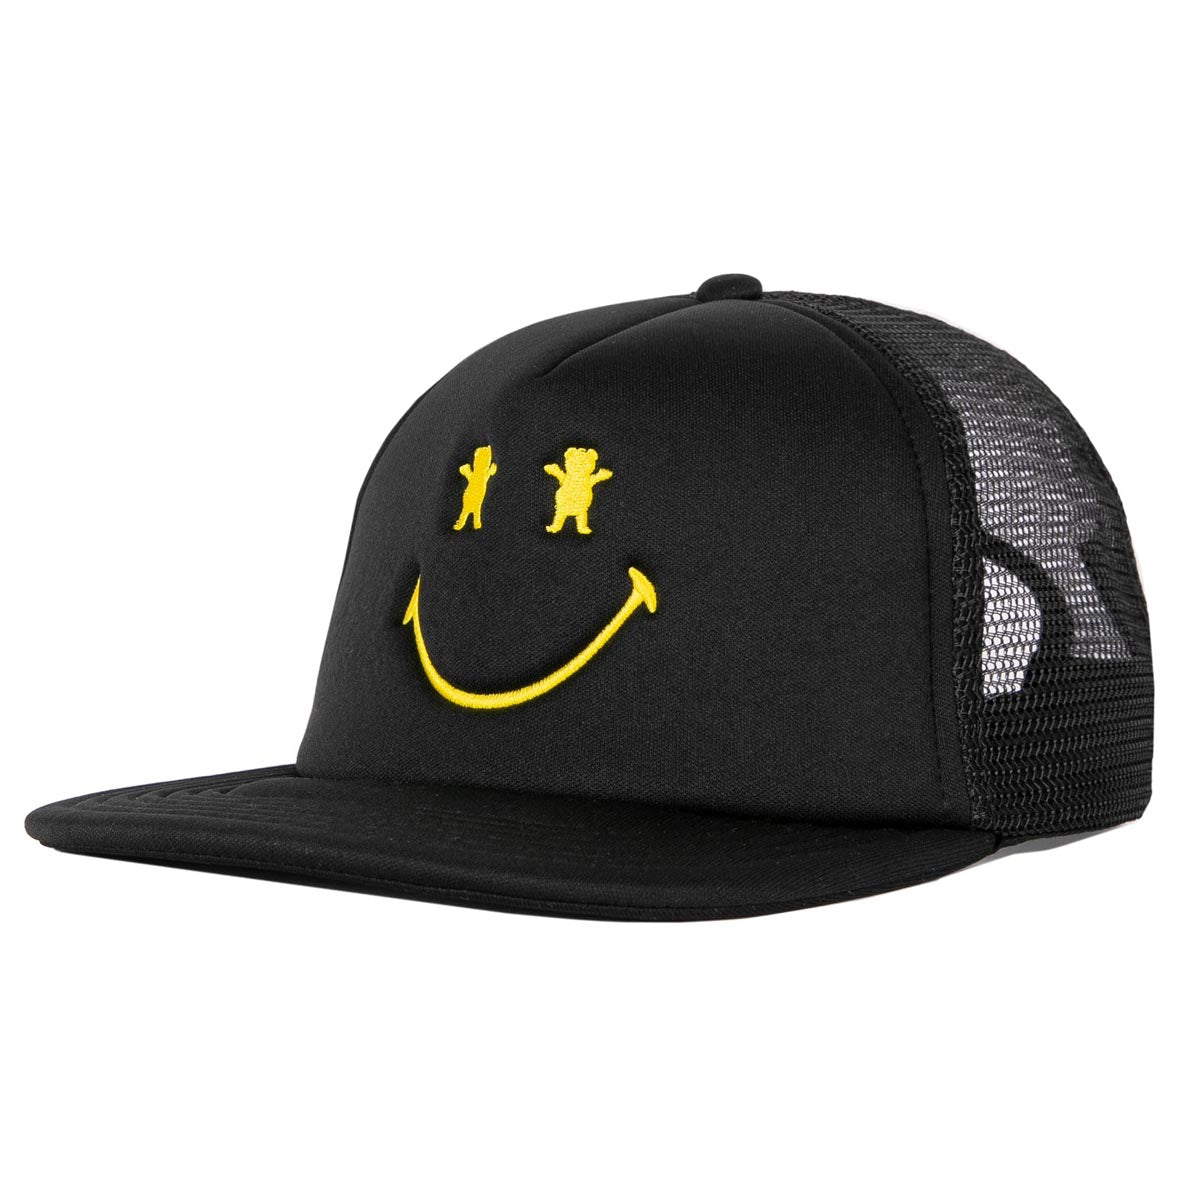 Grizzly x Smiley World Big Smile Trucker Snapback Hat - Black image 1